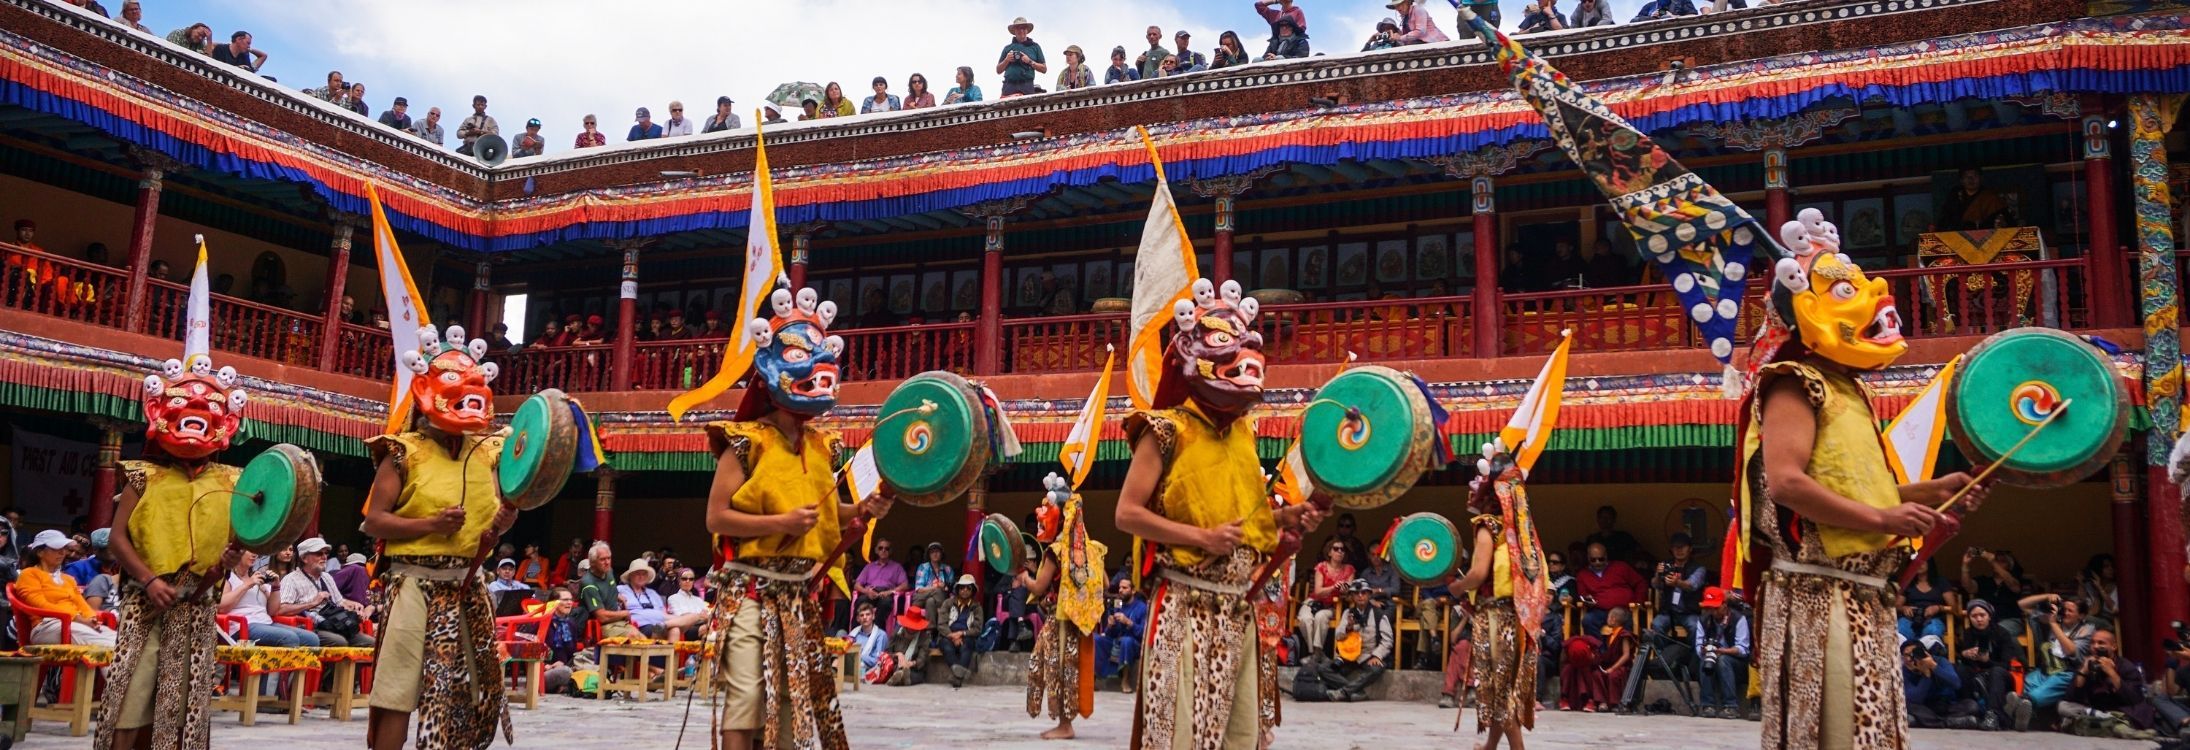 The Ladakh Festival - A Visual Feast